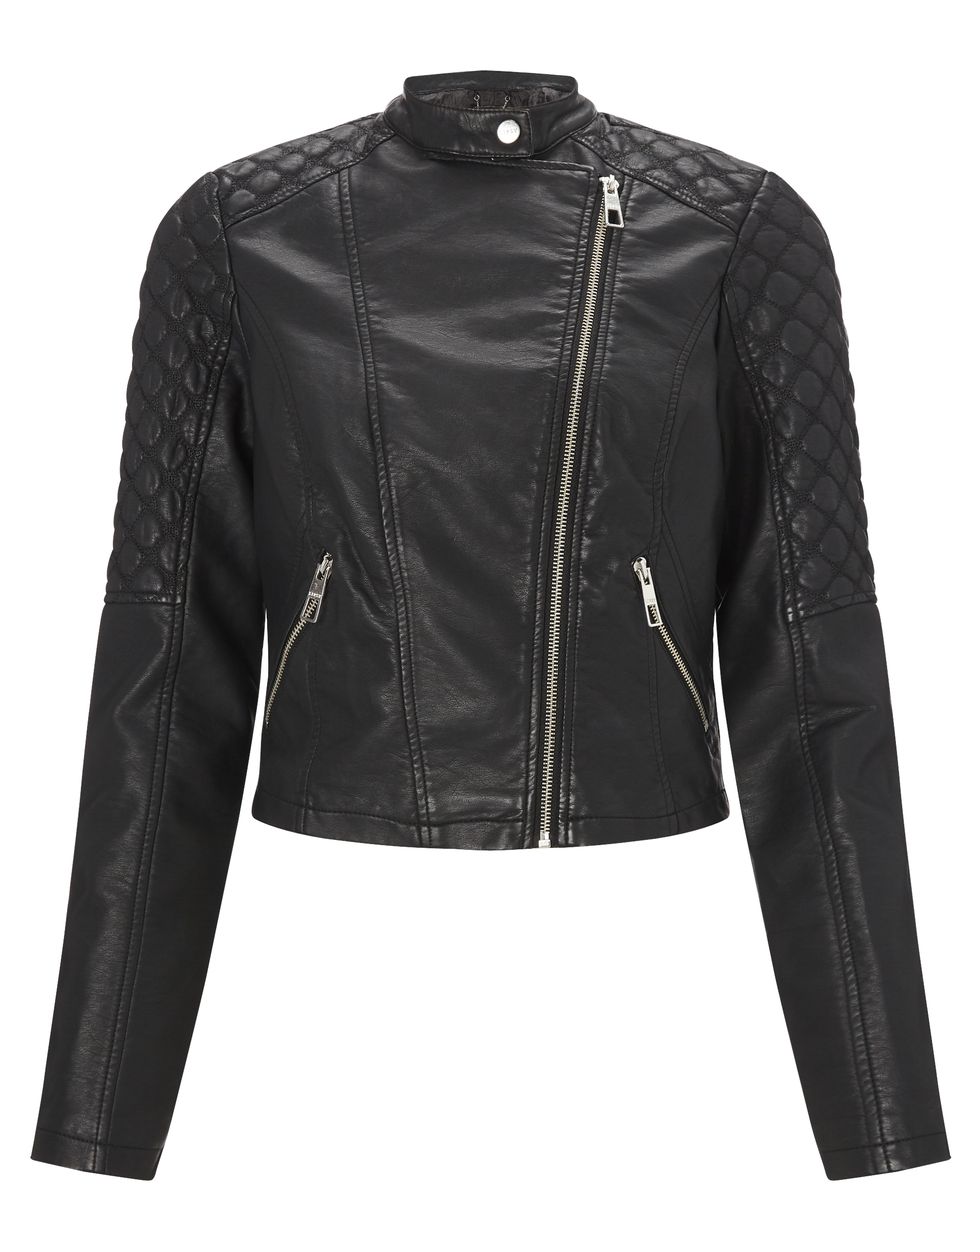 Ariana Grande for Lipsy biker jacket